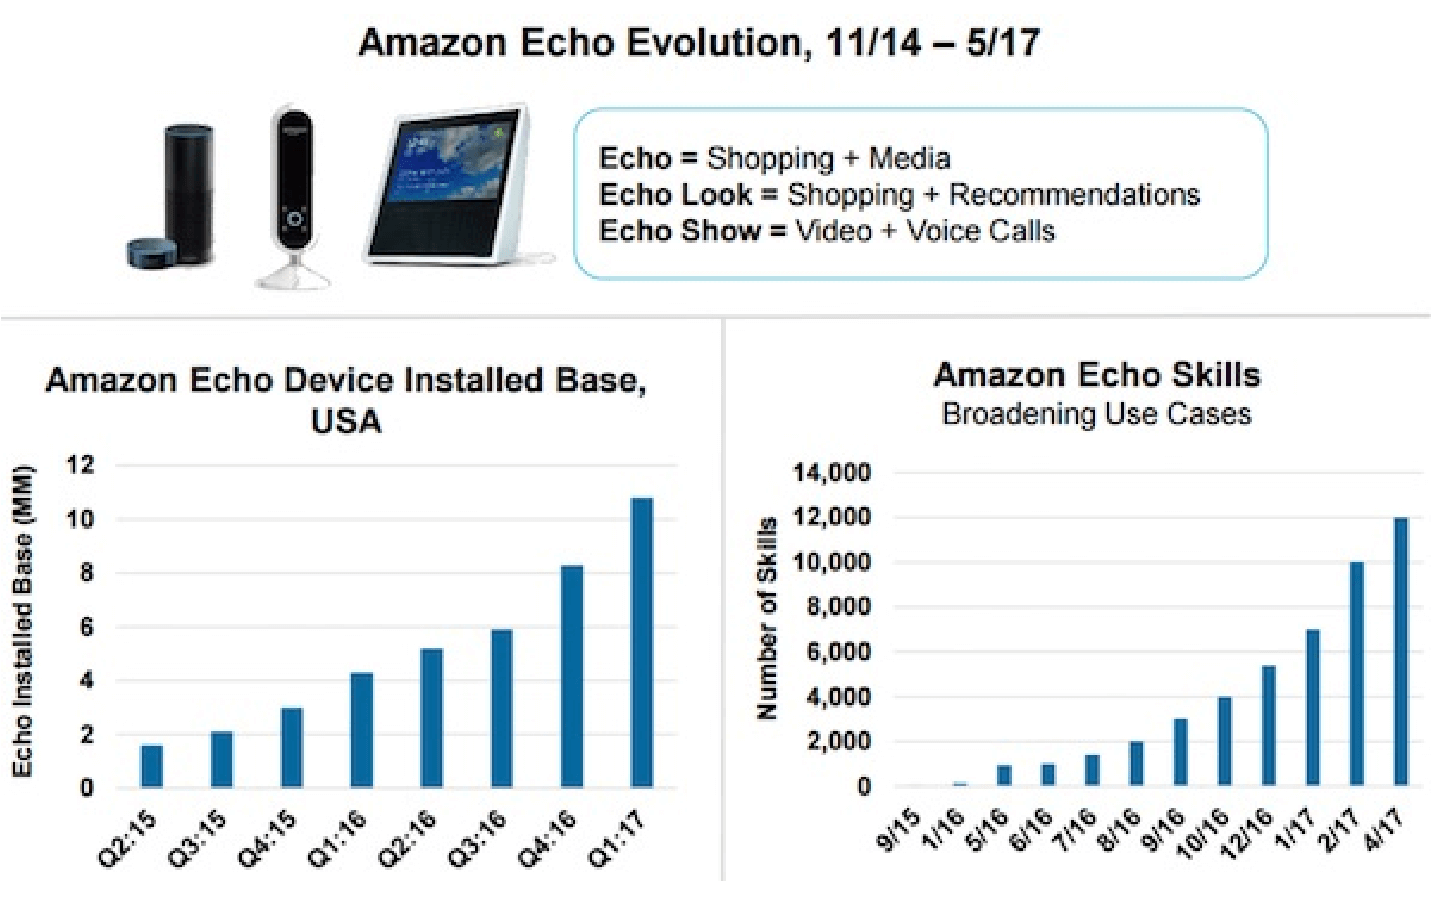 Amazon Echo Evolution